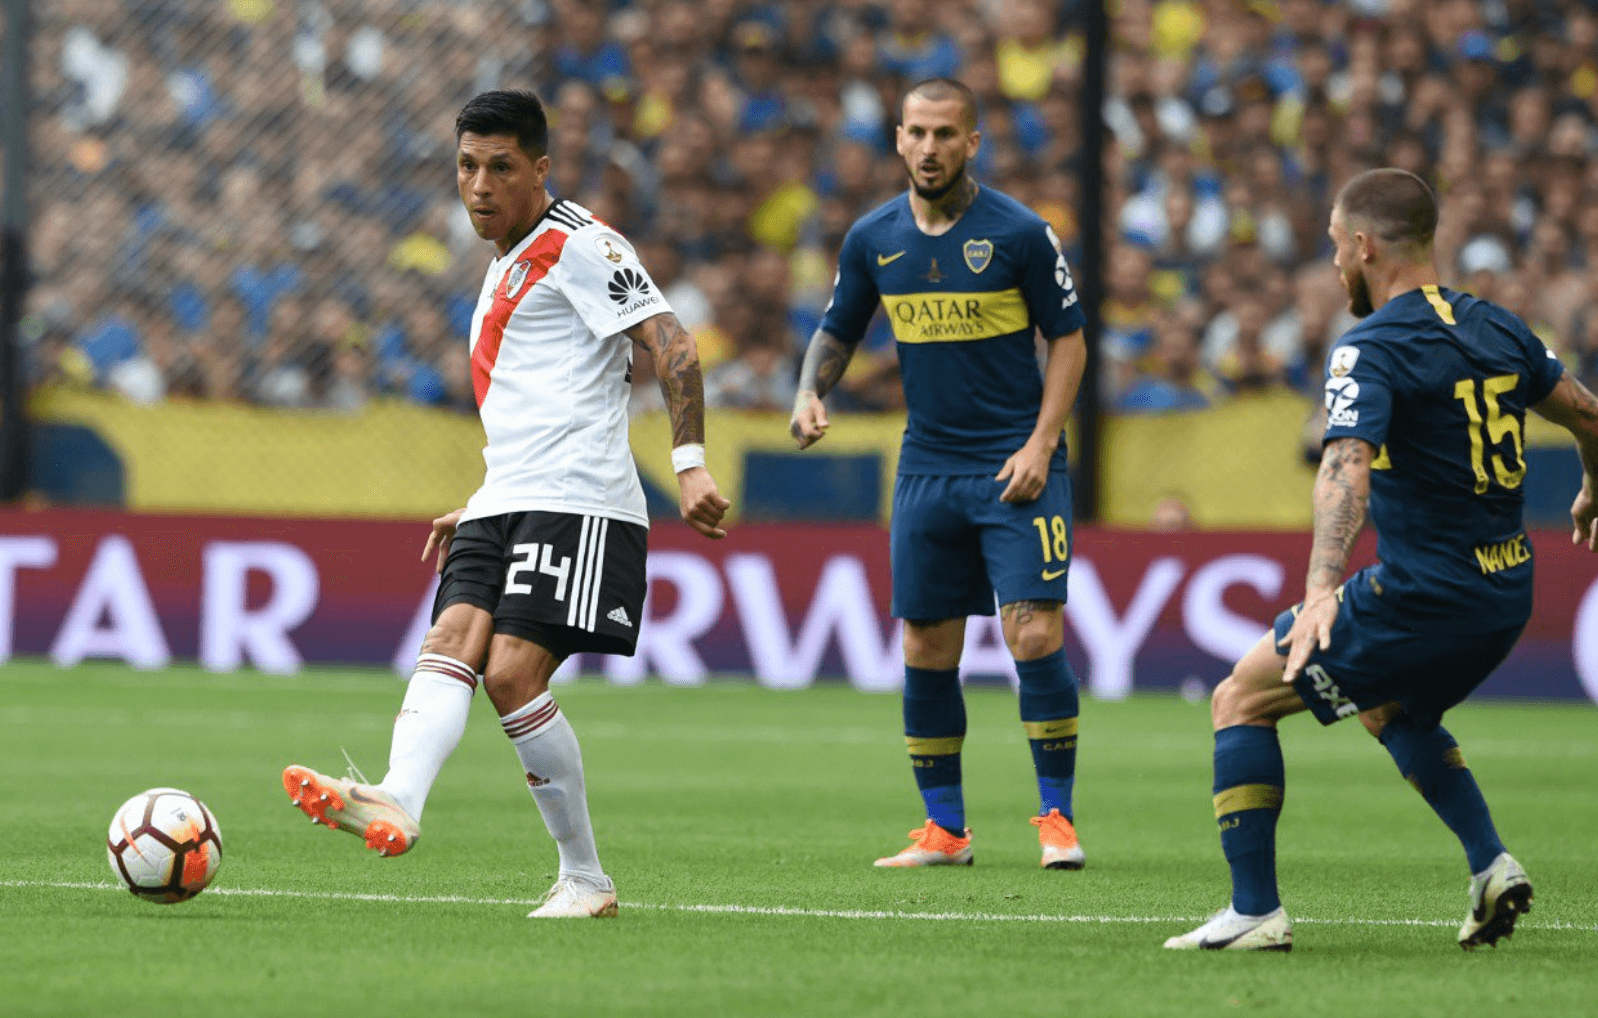 Copa Libertadores postponed one day after River Plate fans attack Boca Juniors bus